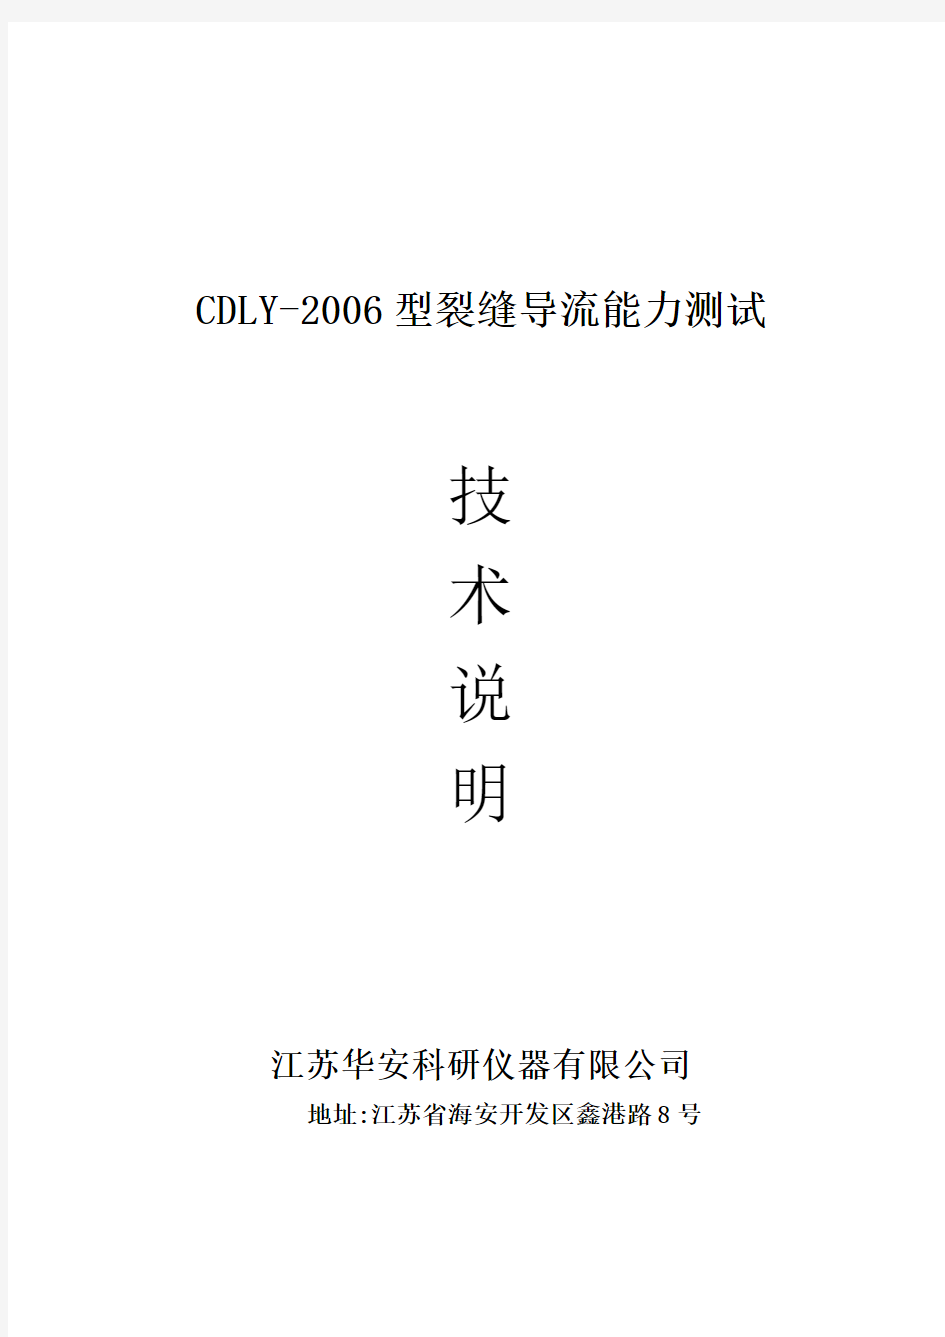 CDLY-2006型裂缝导流能力测试